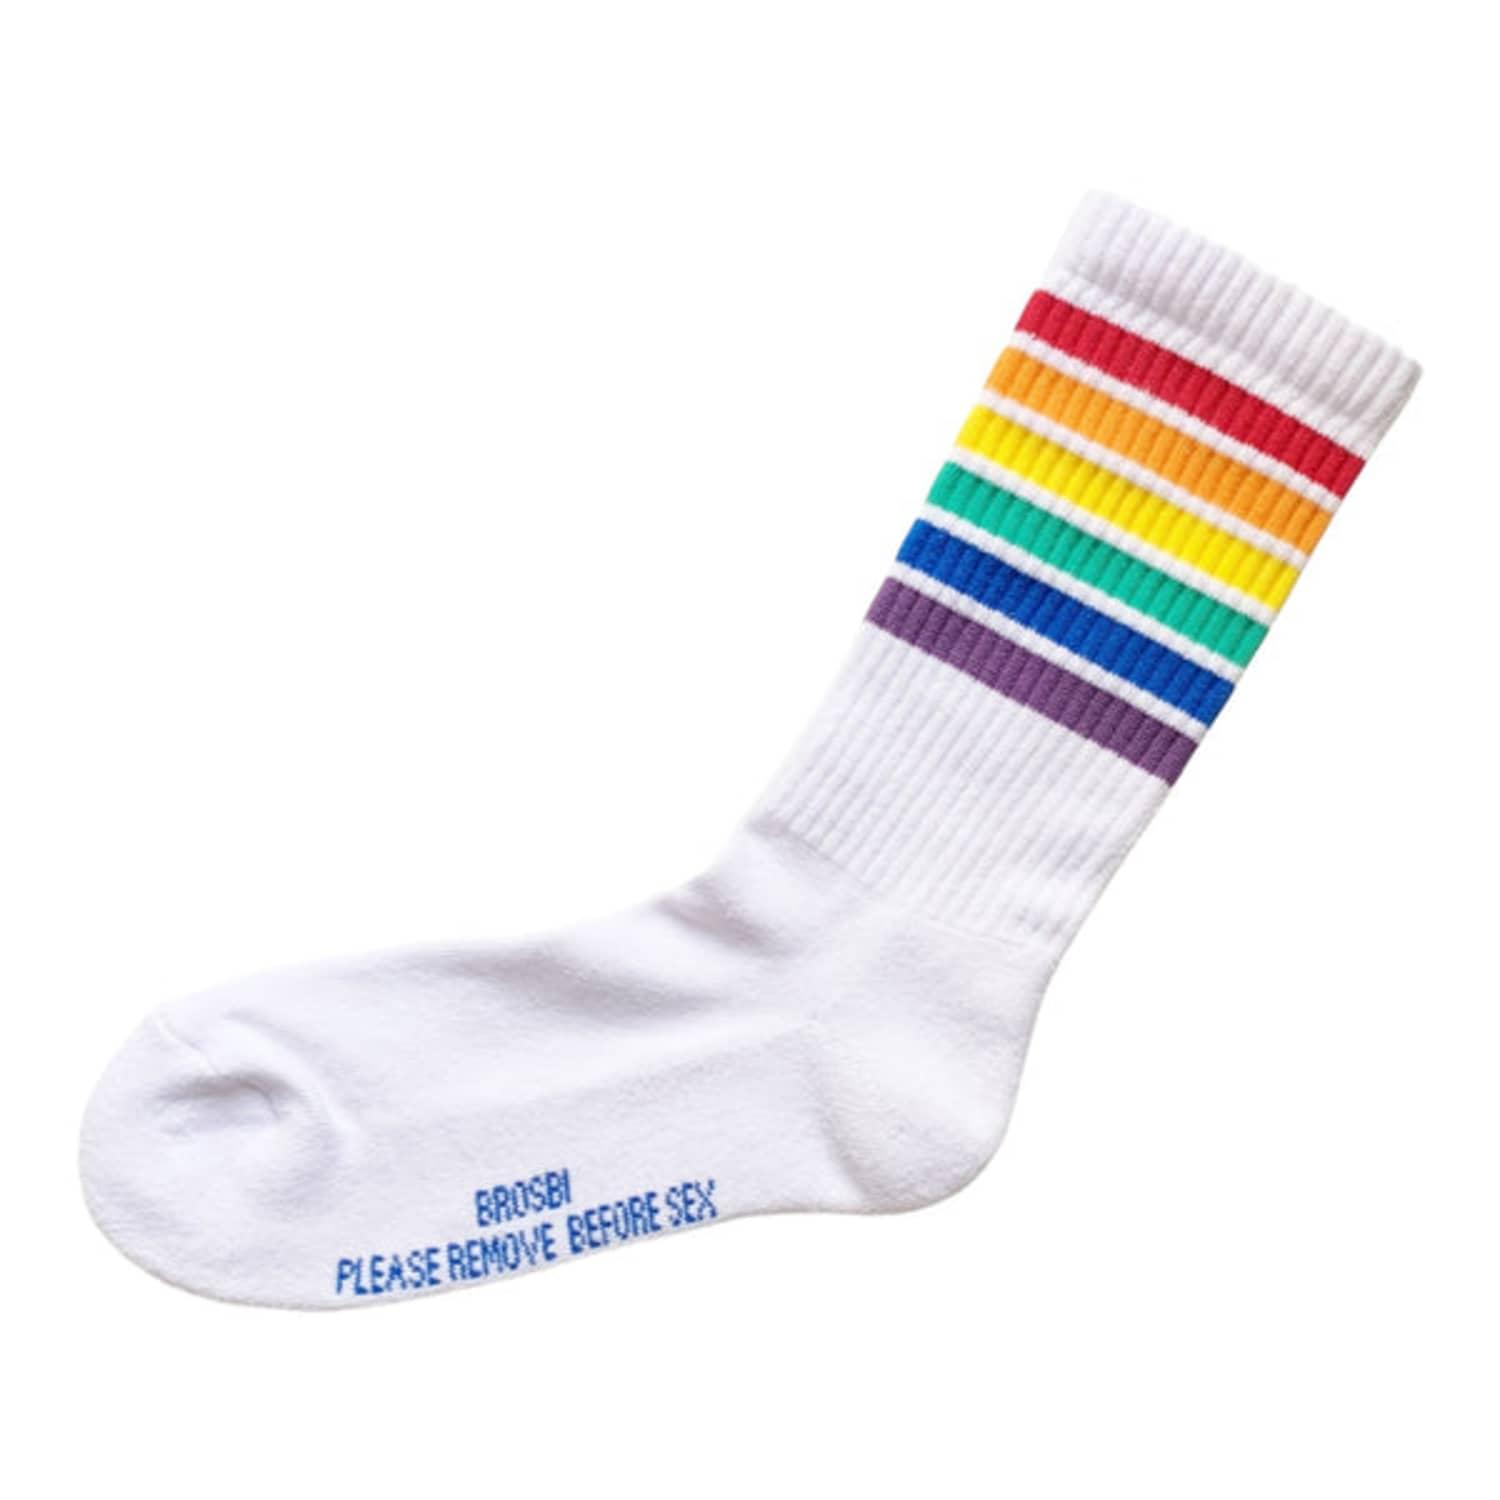 Brosbi Crew Socks Rainbow for Men | Lyst